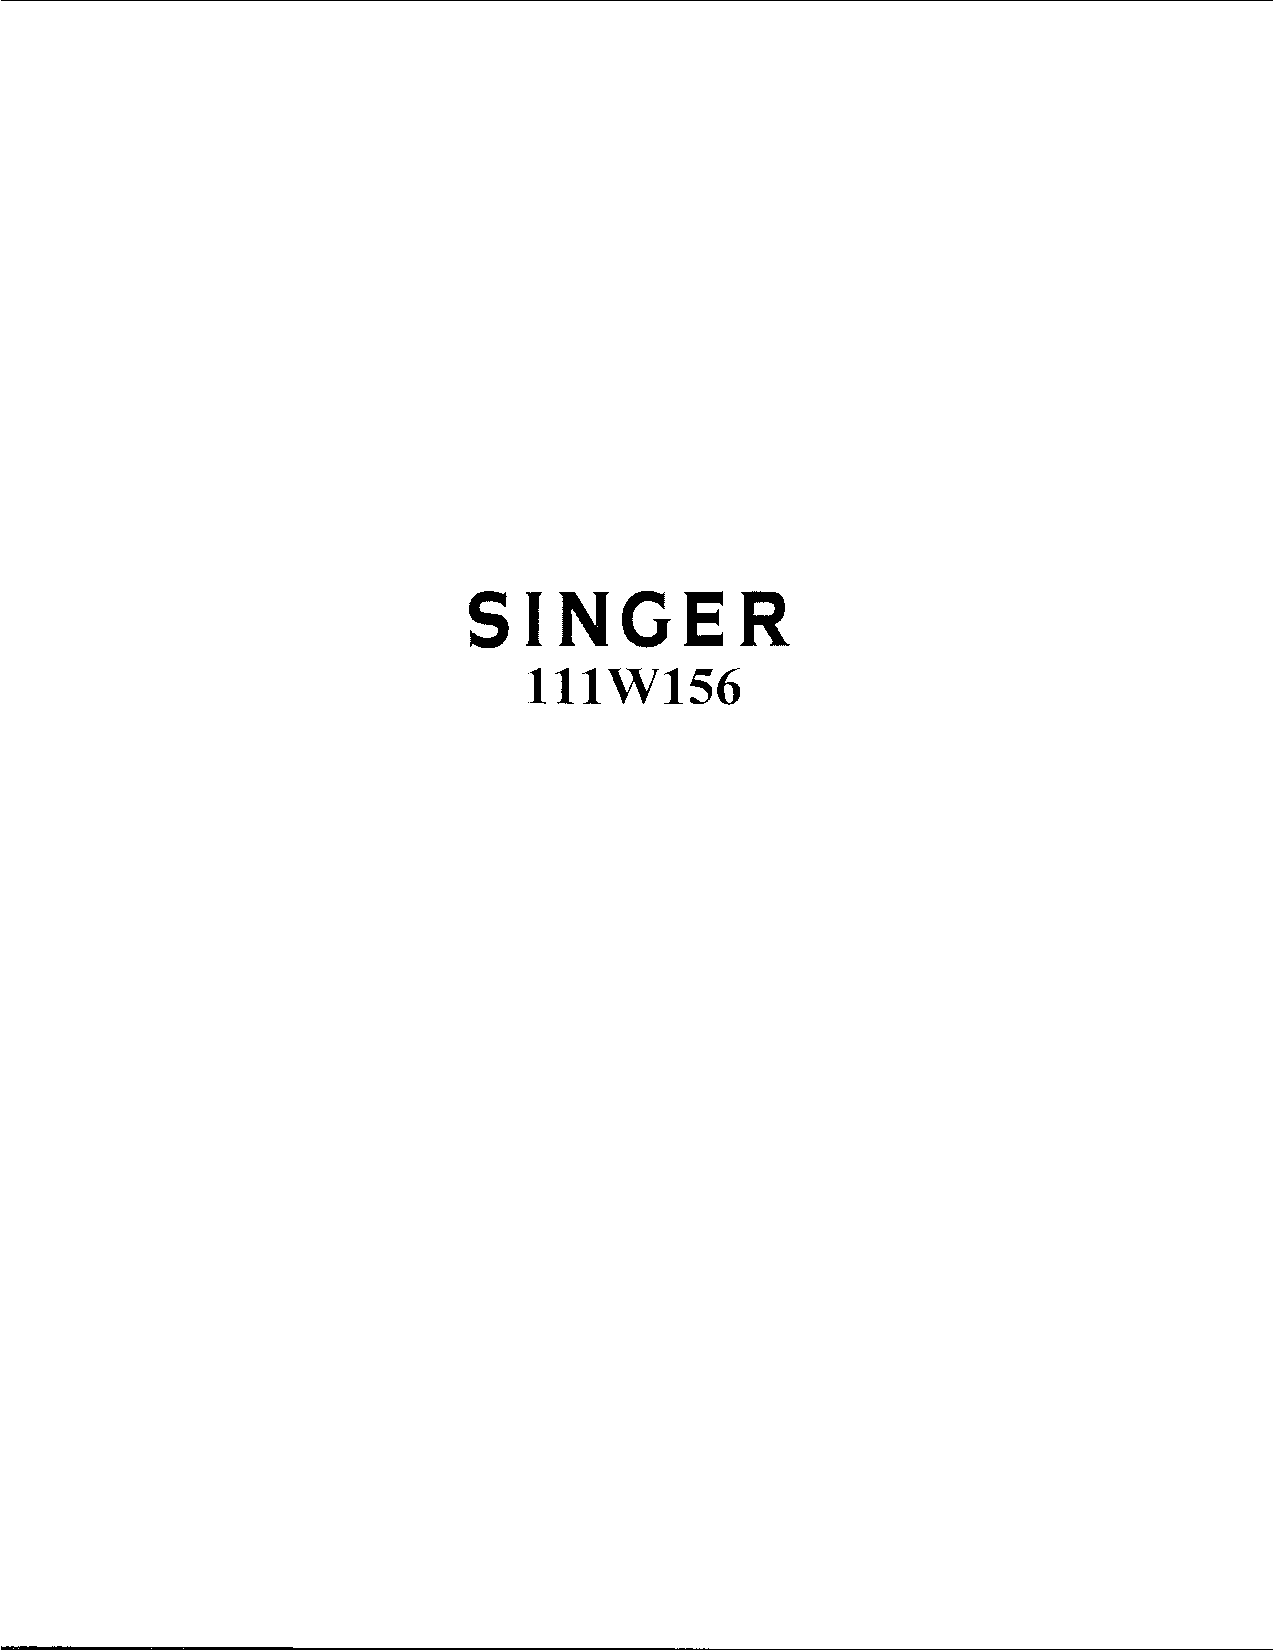 Singer 111W156 User Manual